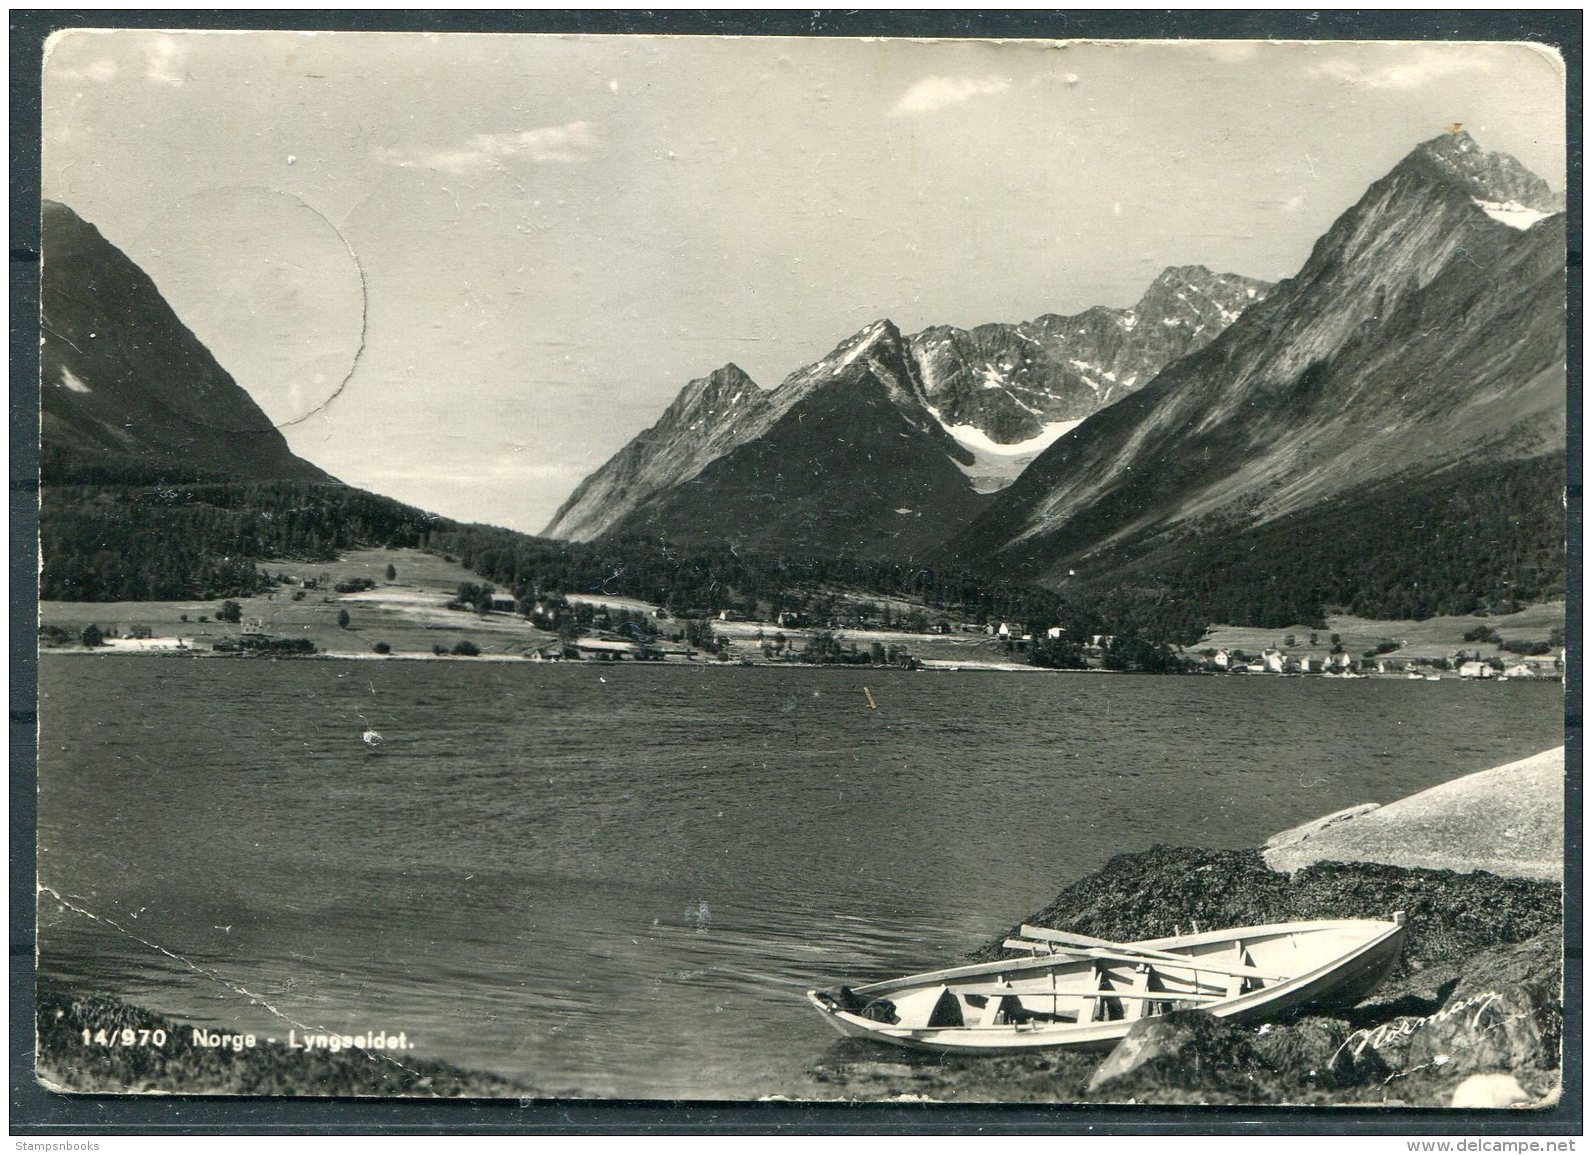 1949 Norway Finland Lyngeeldet Postcard. Karikasniemi Straight Line Cancel, Mixed Franking - Covers & Documents